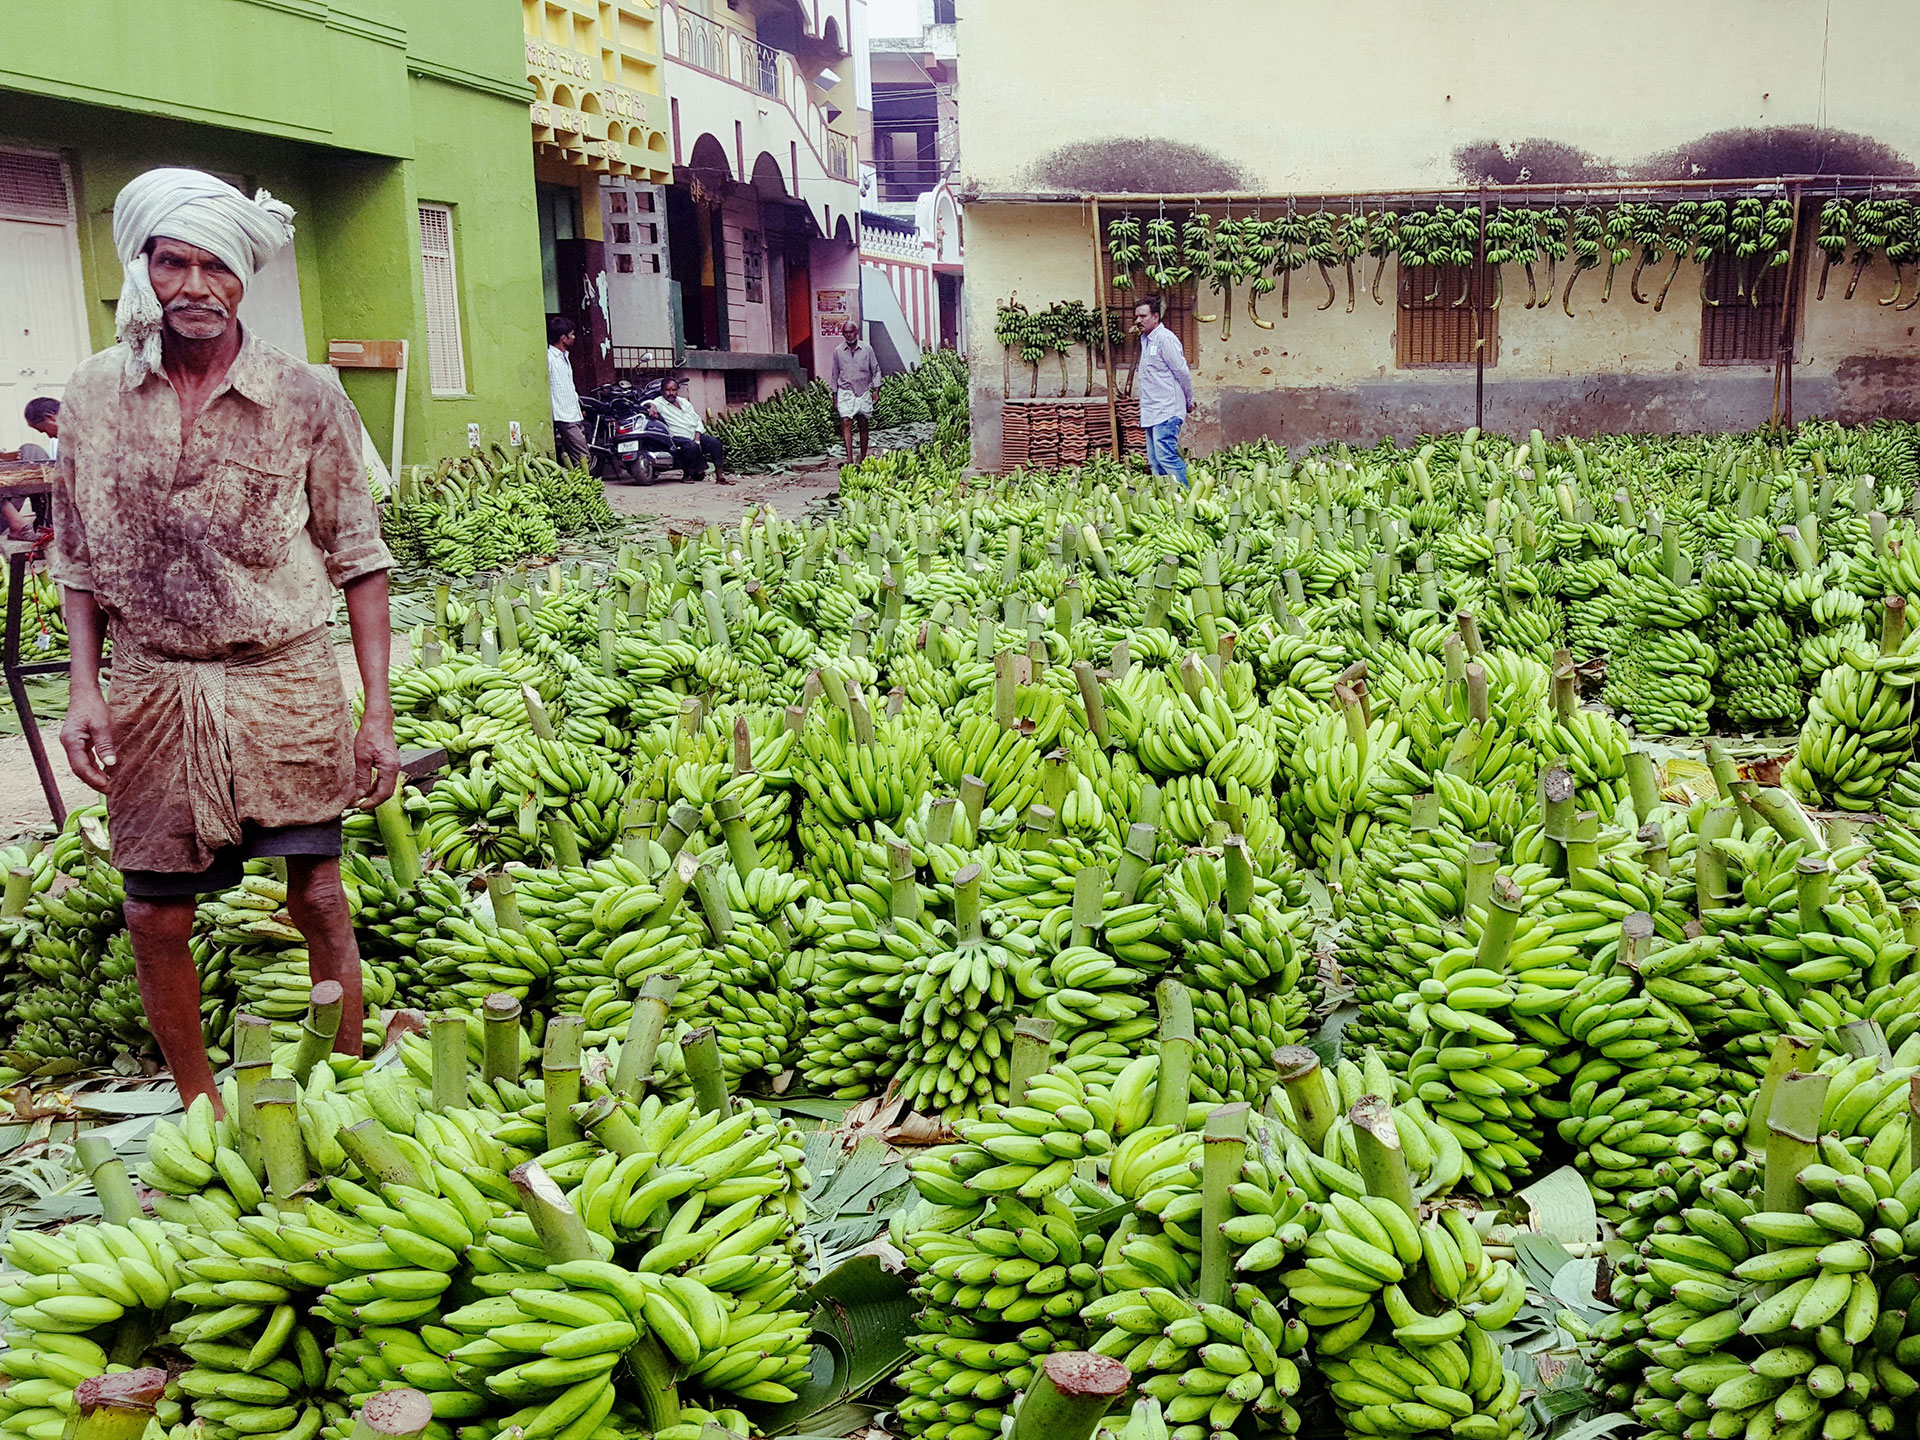 Man wearing a turban in a banana market in India